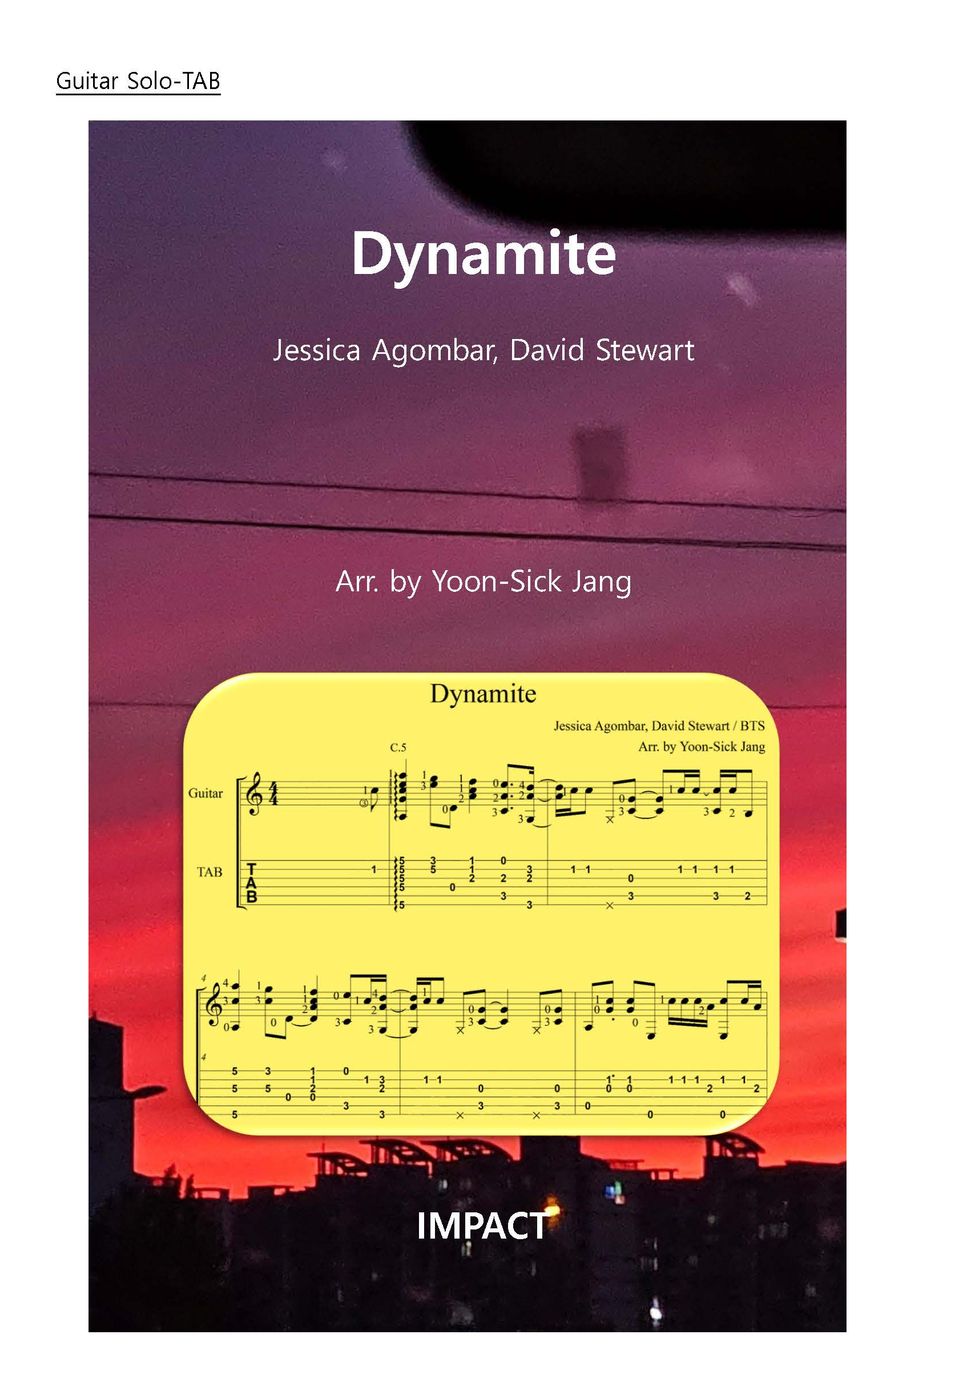 David Stewart, Jessica Agombar - Dynamite by Yoon-Sick Jang